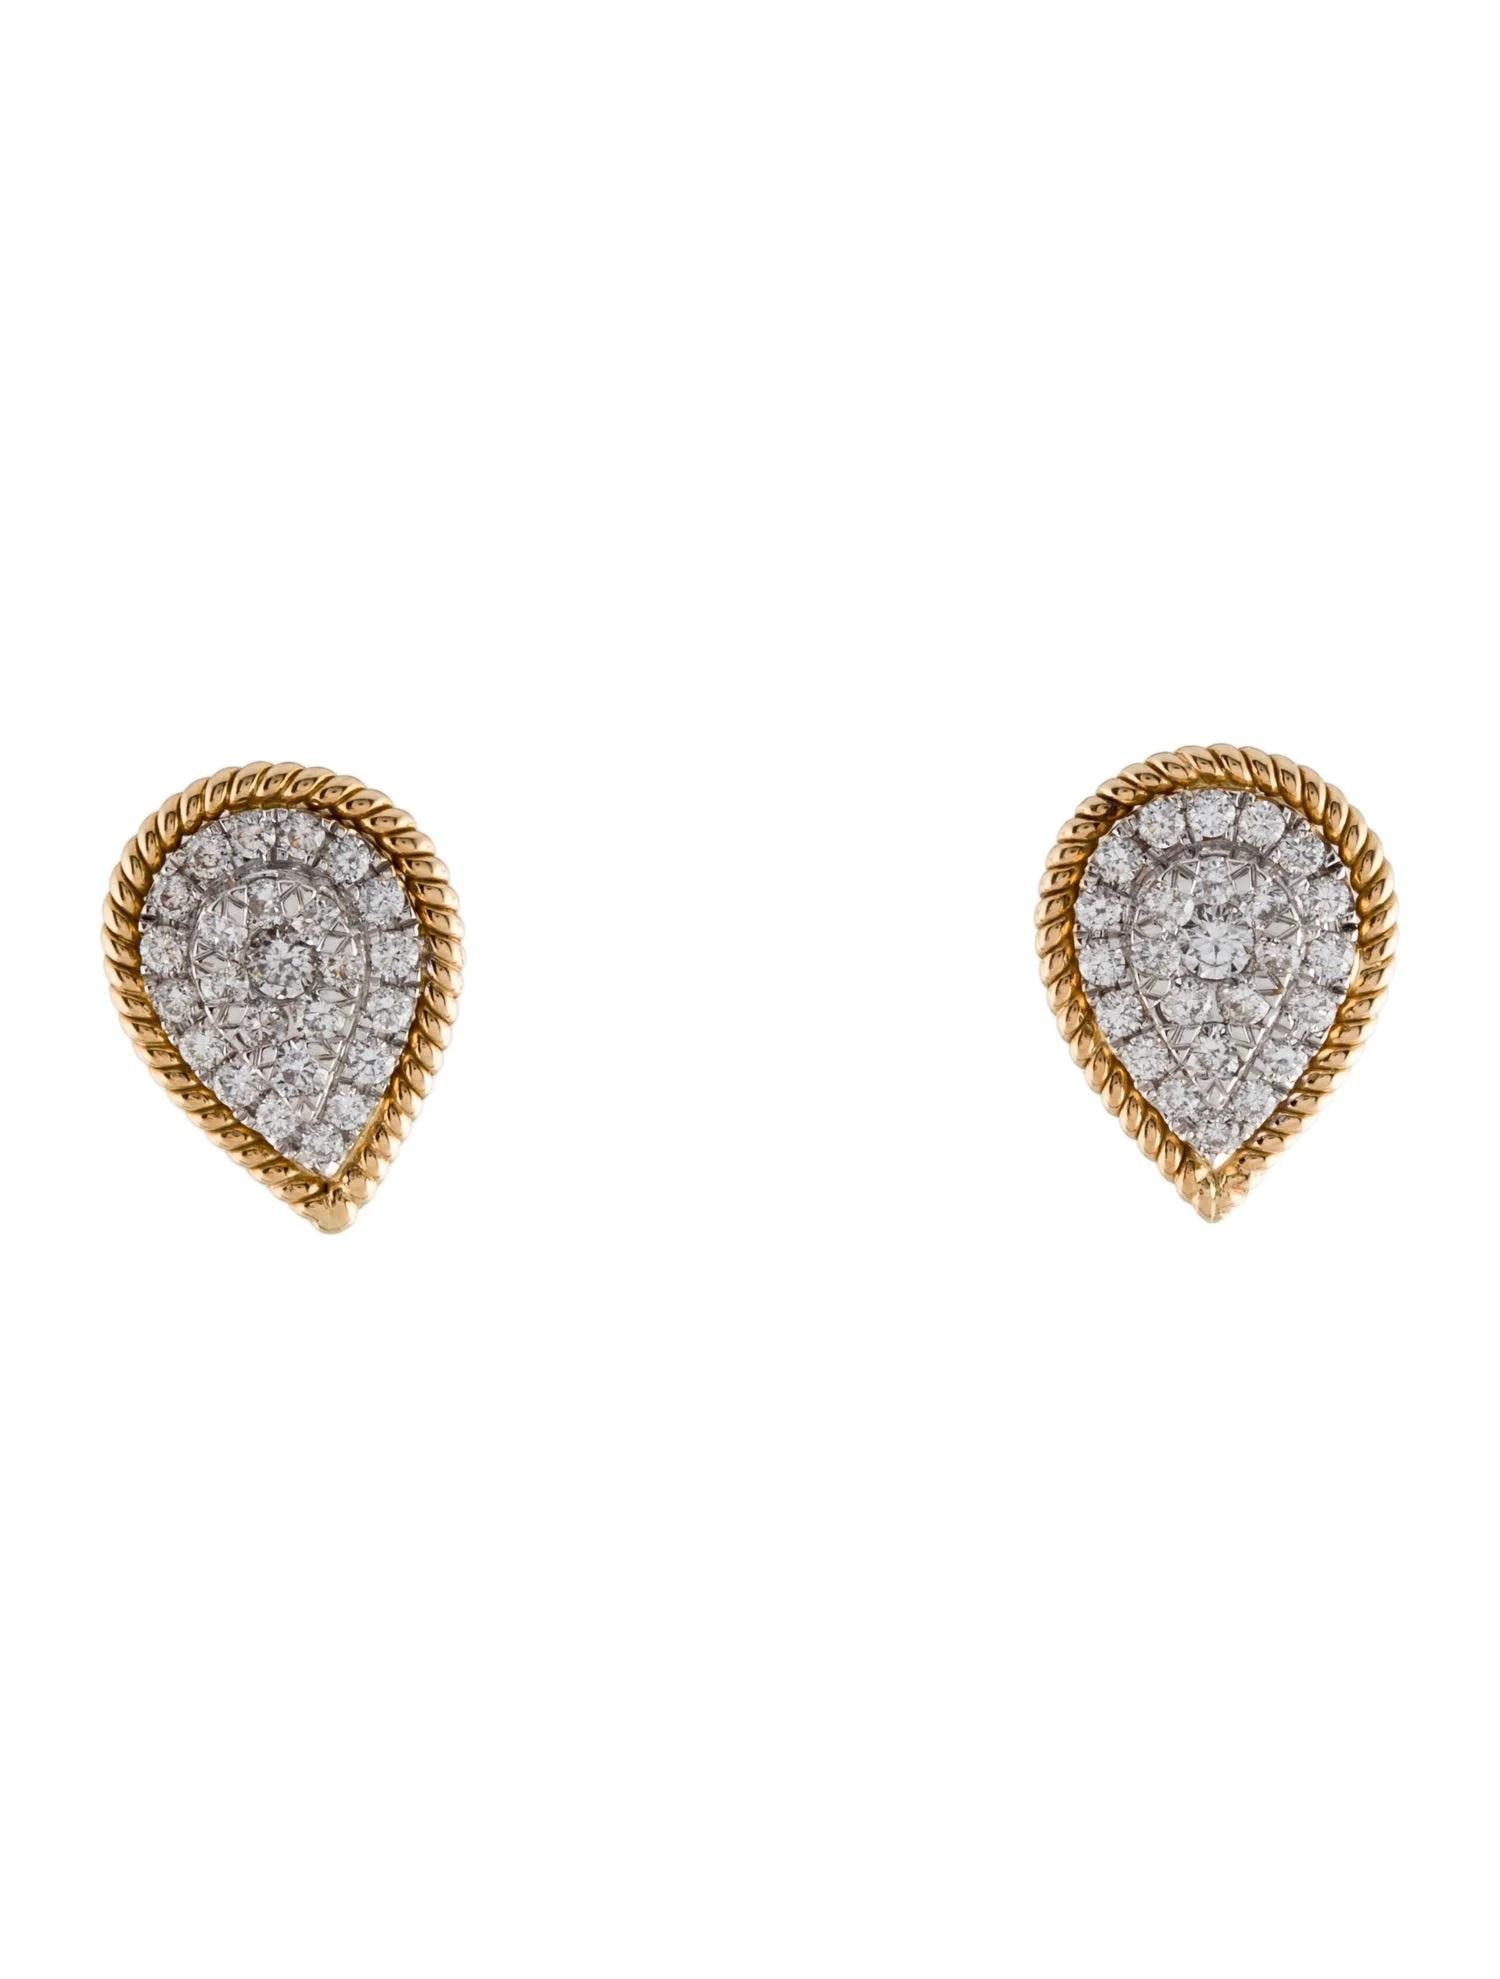 Brilliant Cut  18K Yellow Gold Diamond Stud Earrings, 0.56 Carats For Sale